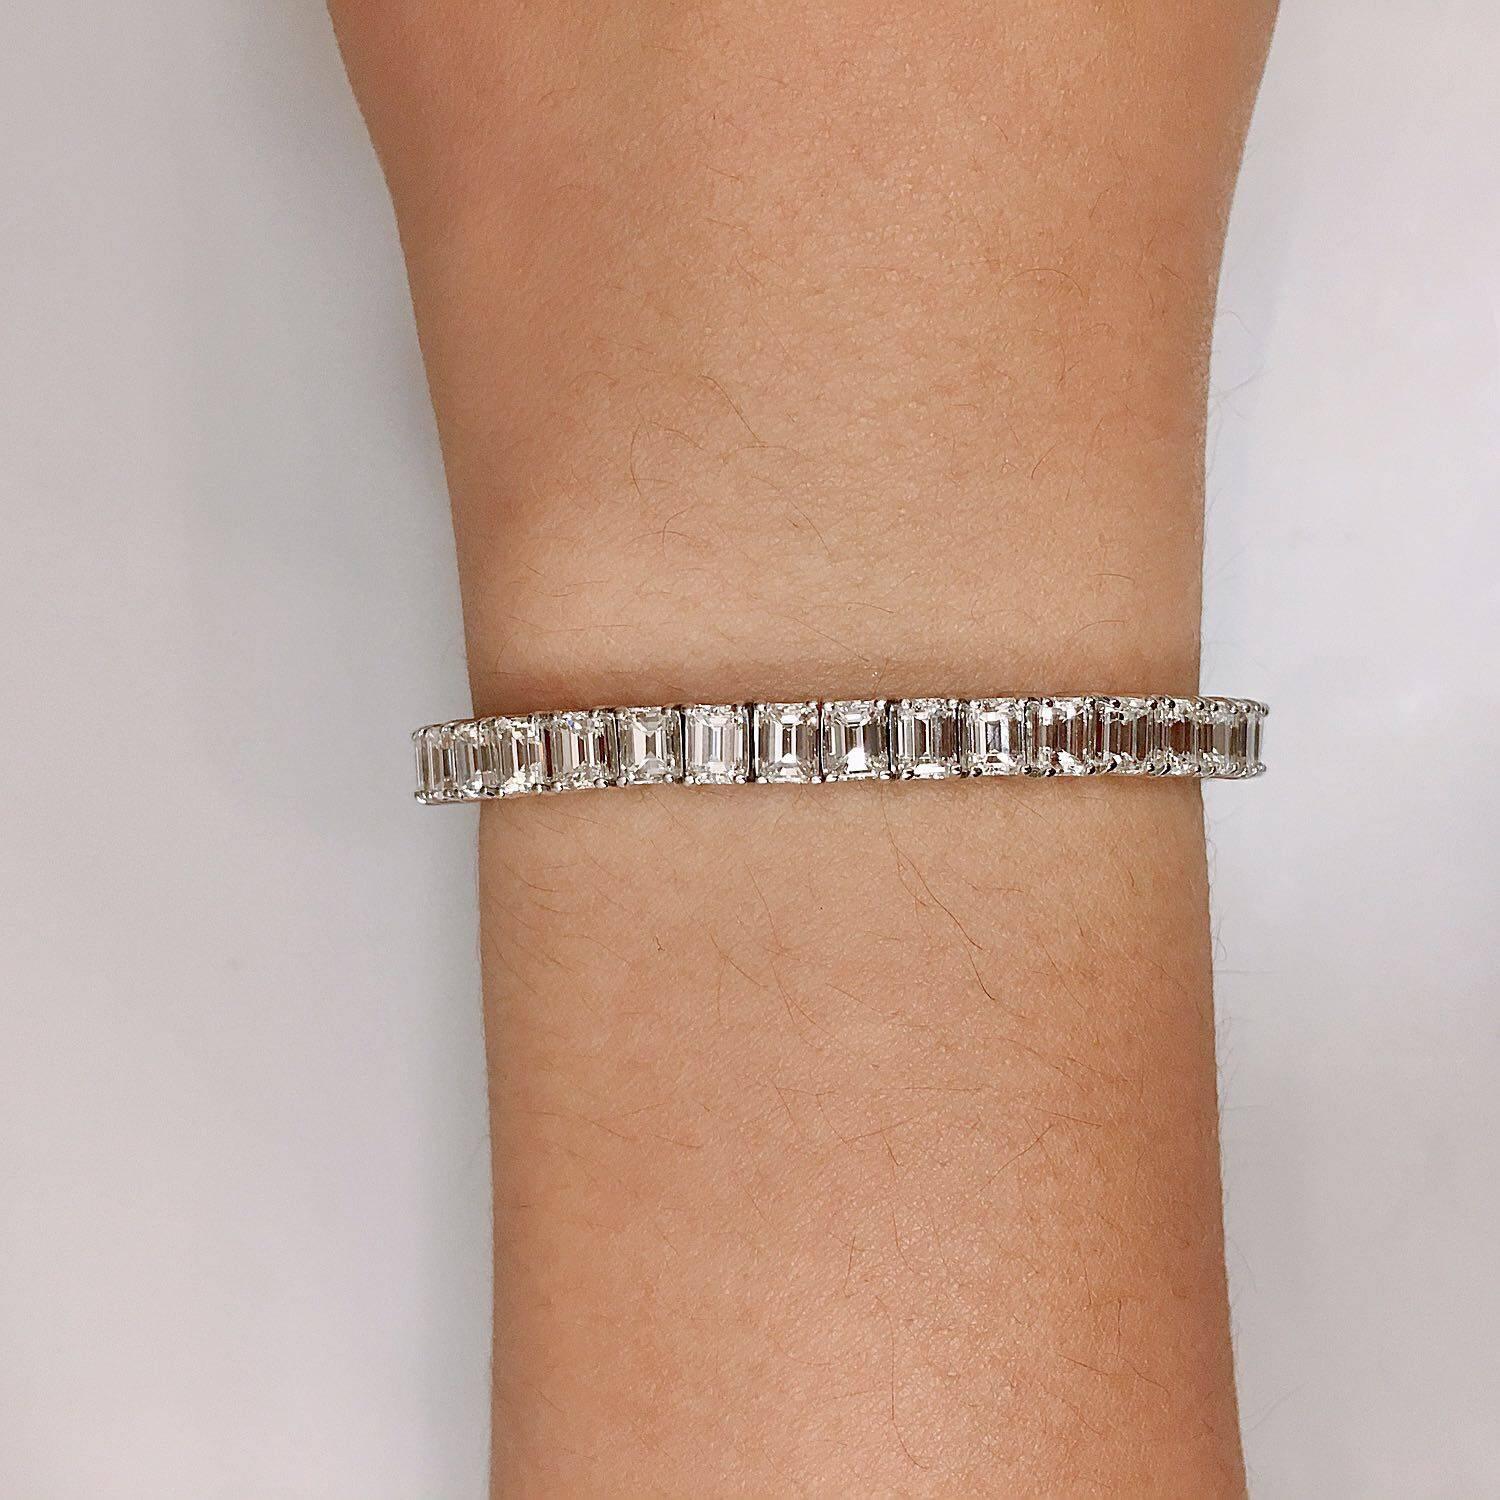 16 carat diamond bracelet